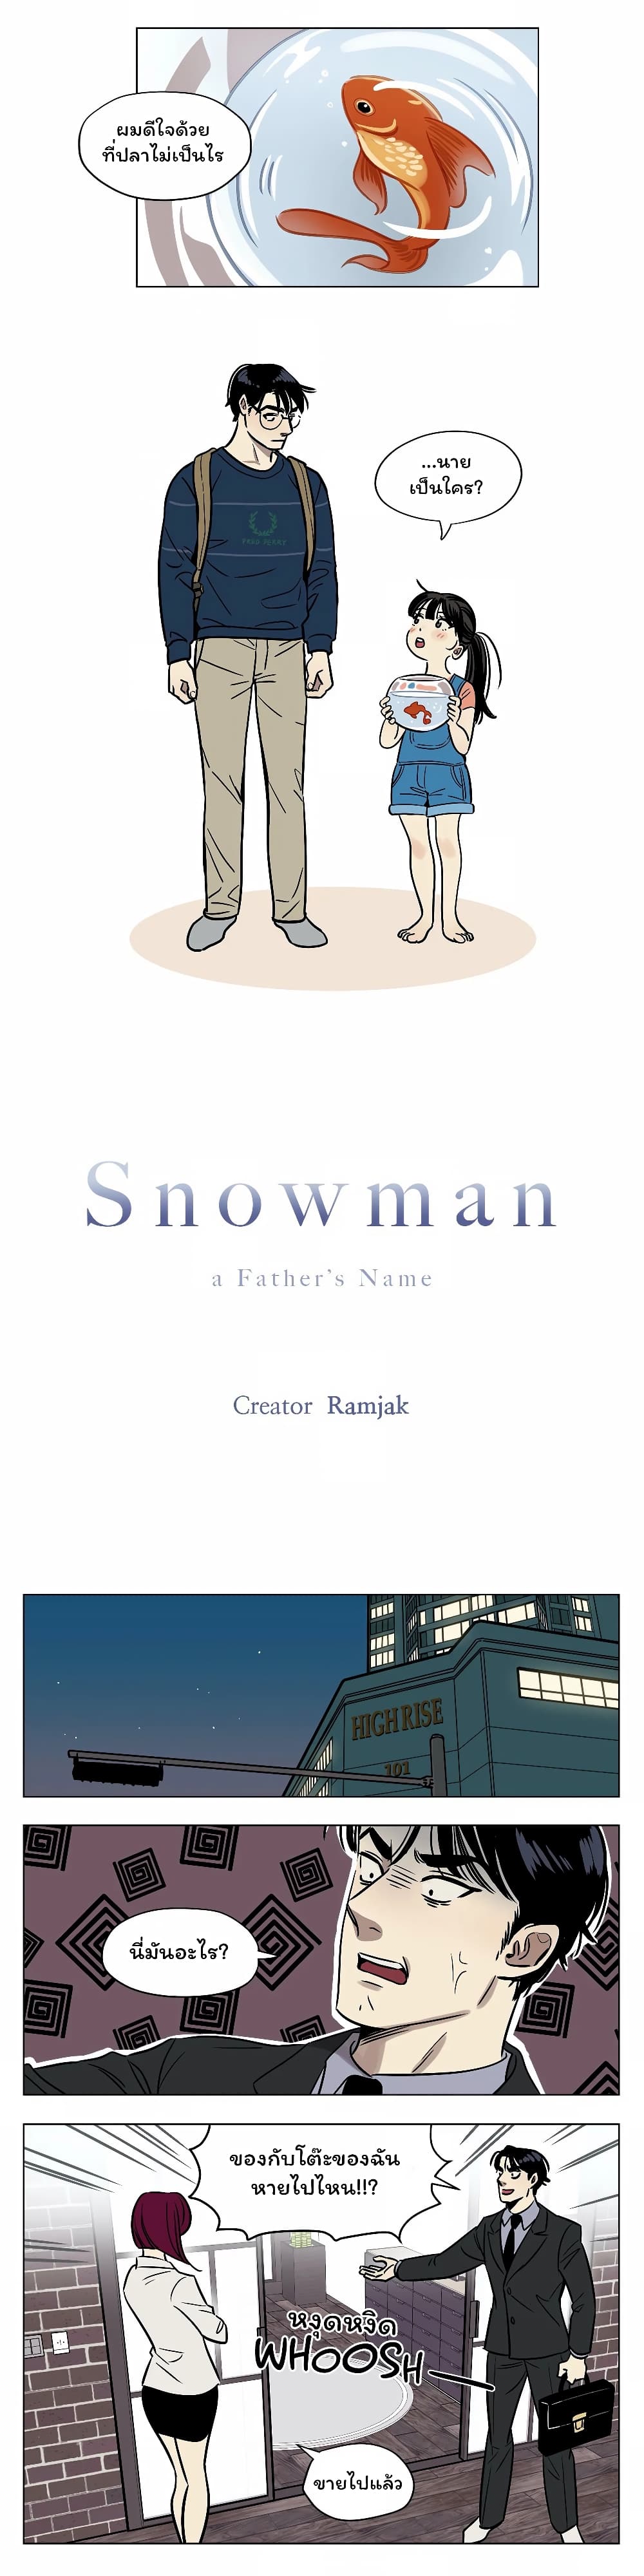 Snowman2 (8)